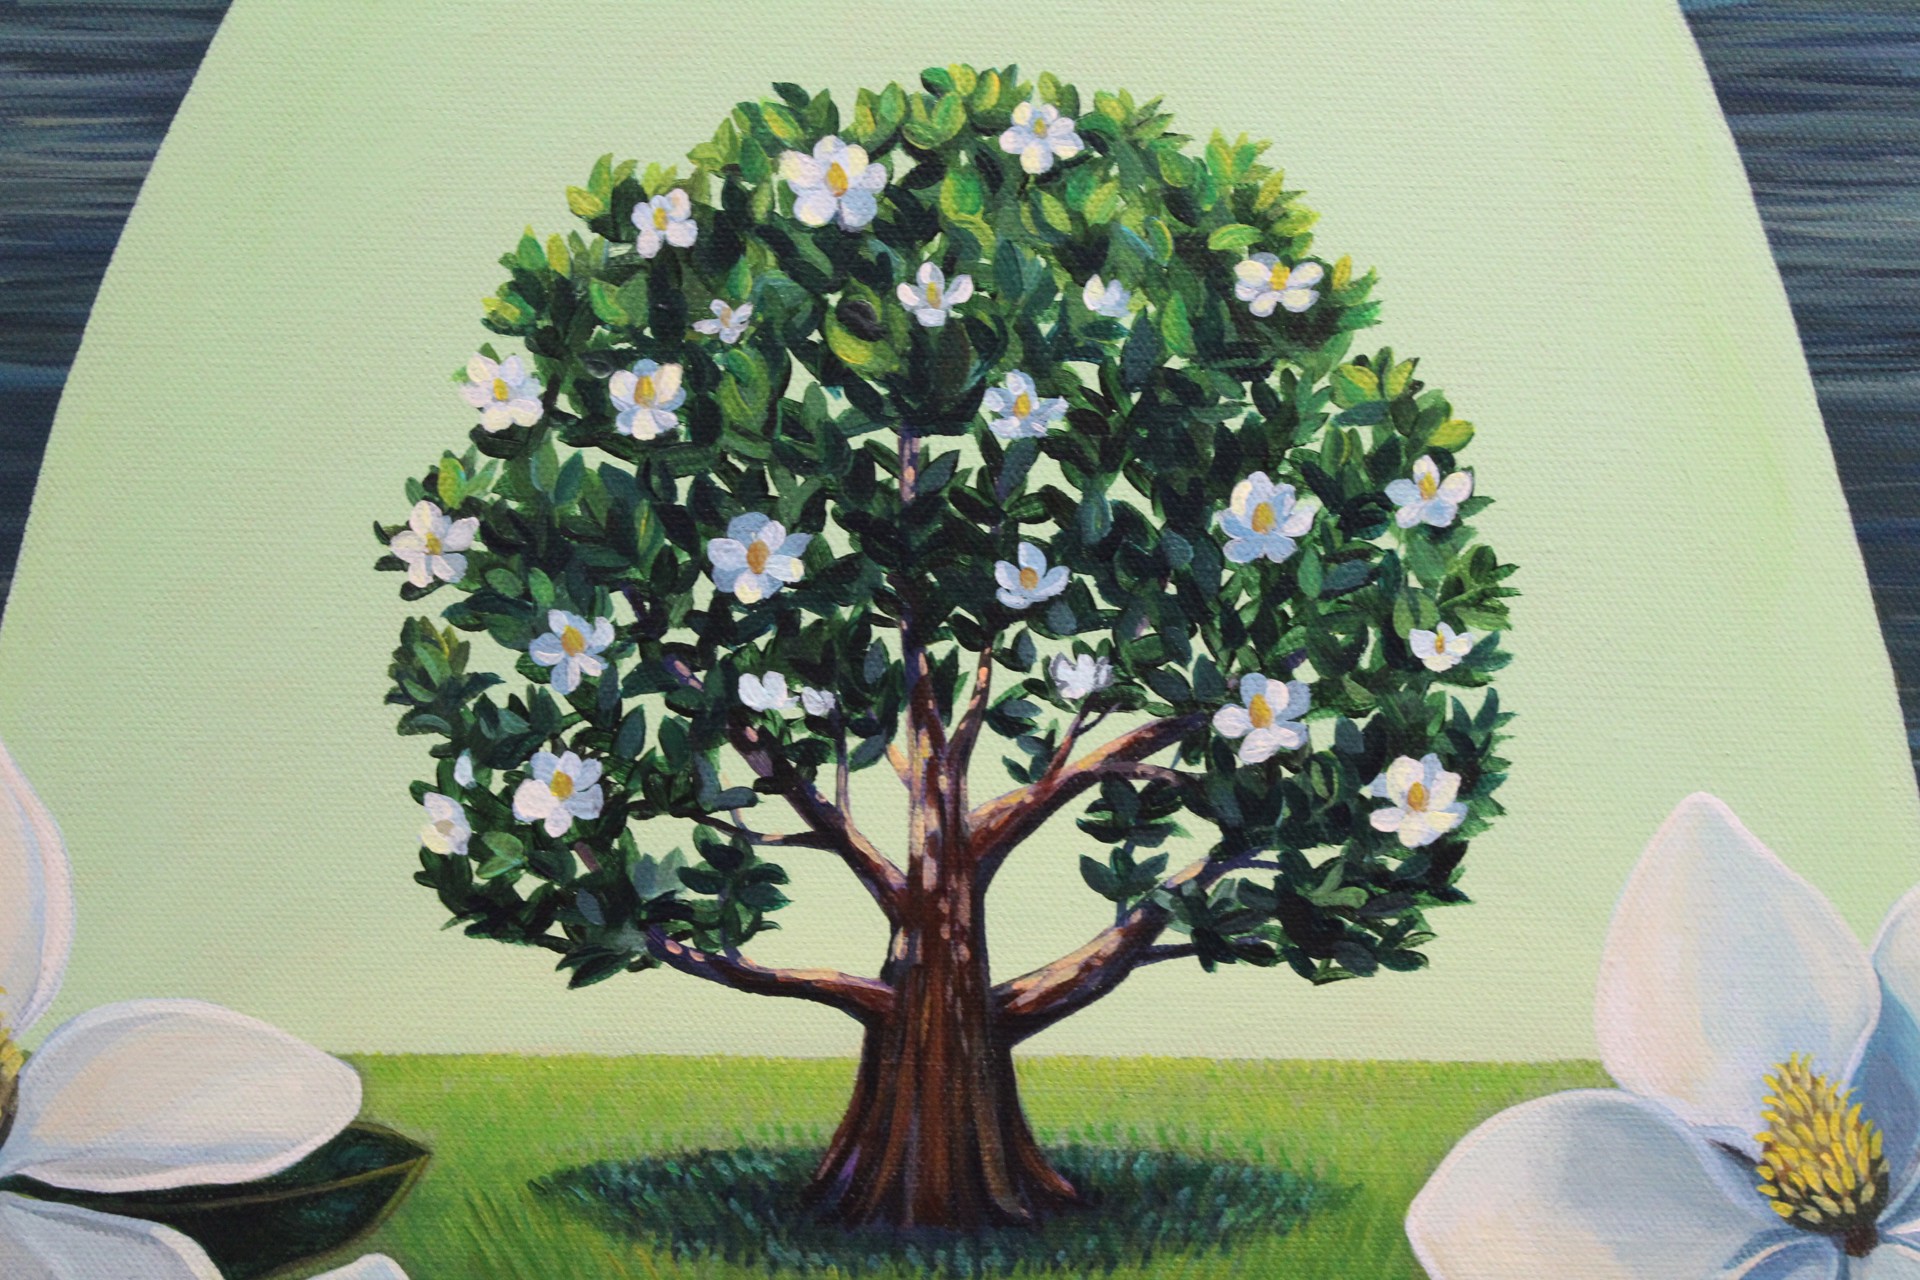 Mourning Dress Magnolia by Lisa Shimko